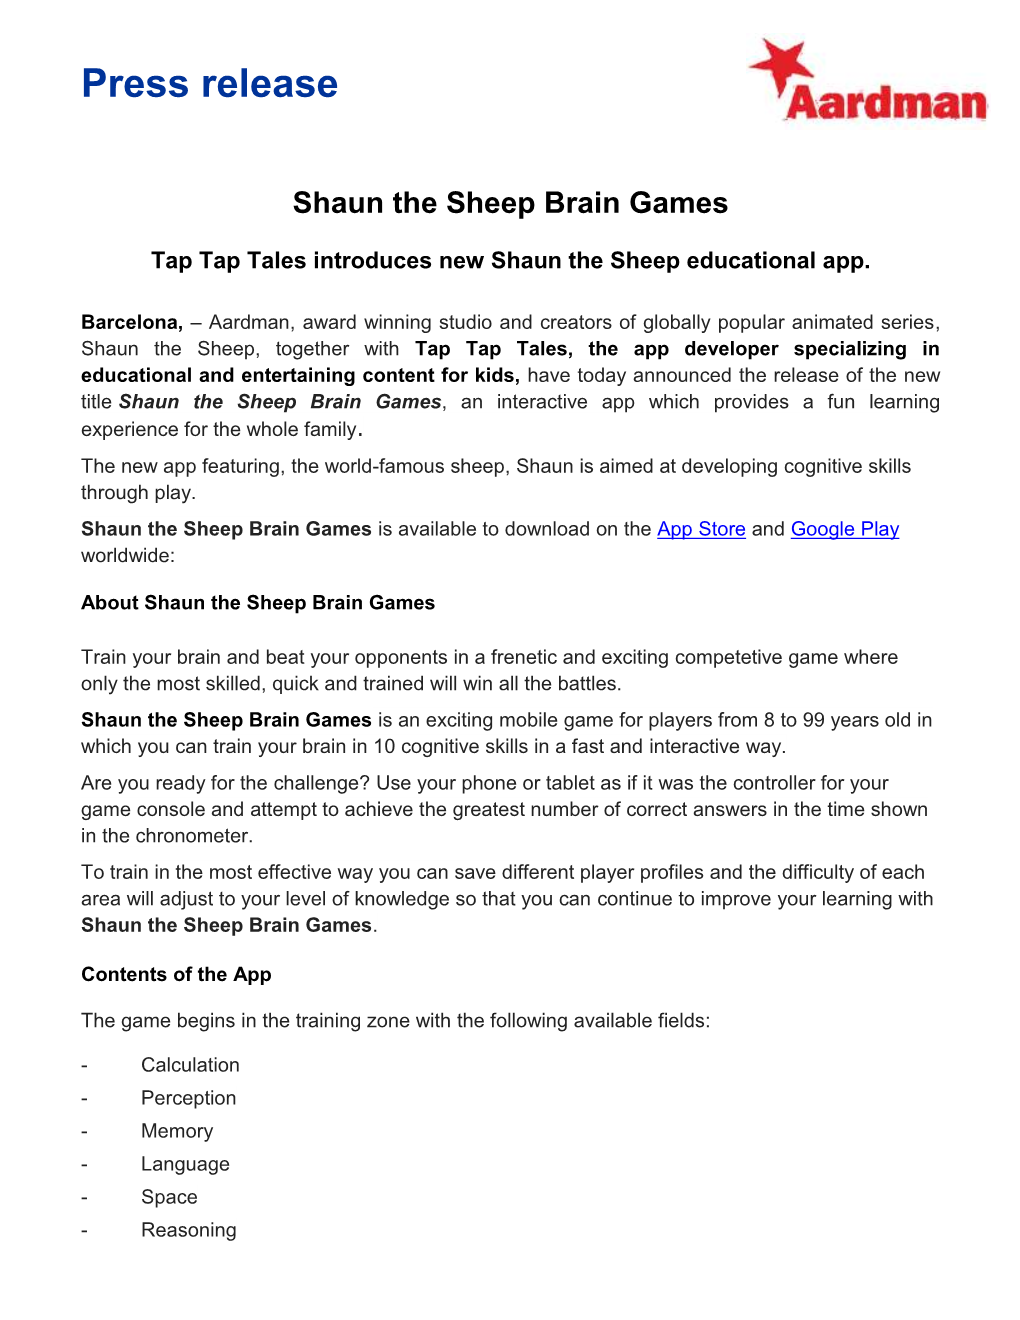 Press Release Shaun the Sheep Brain Games